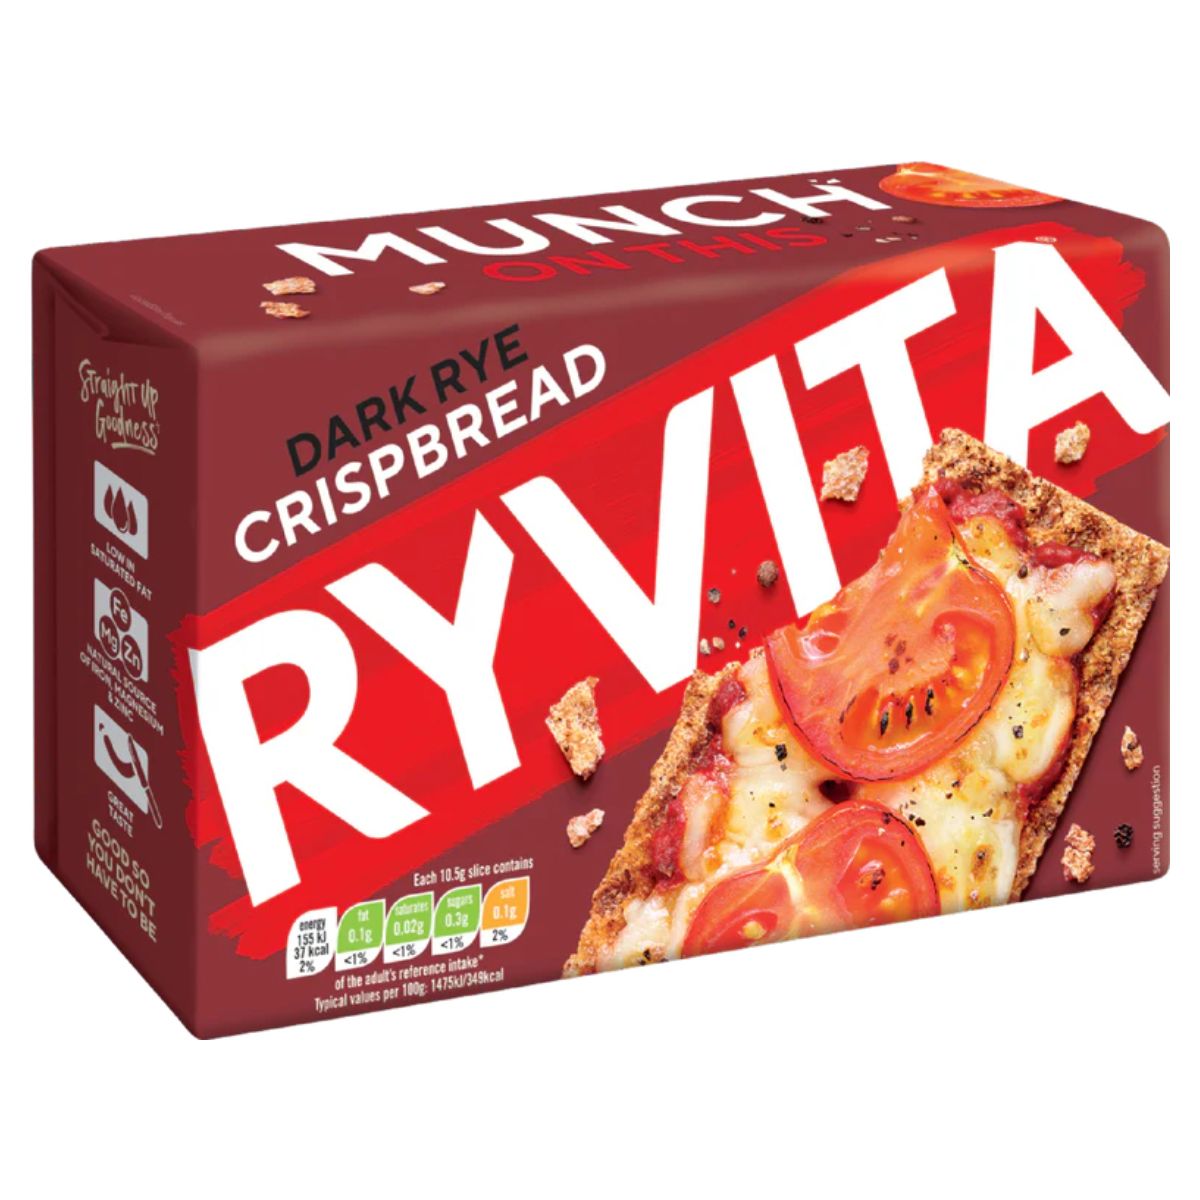 A box of Ryvita Crispbread Dark Rye Crackers - 250g.